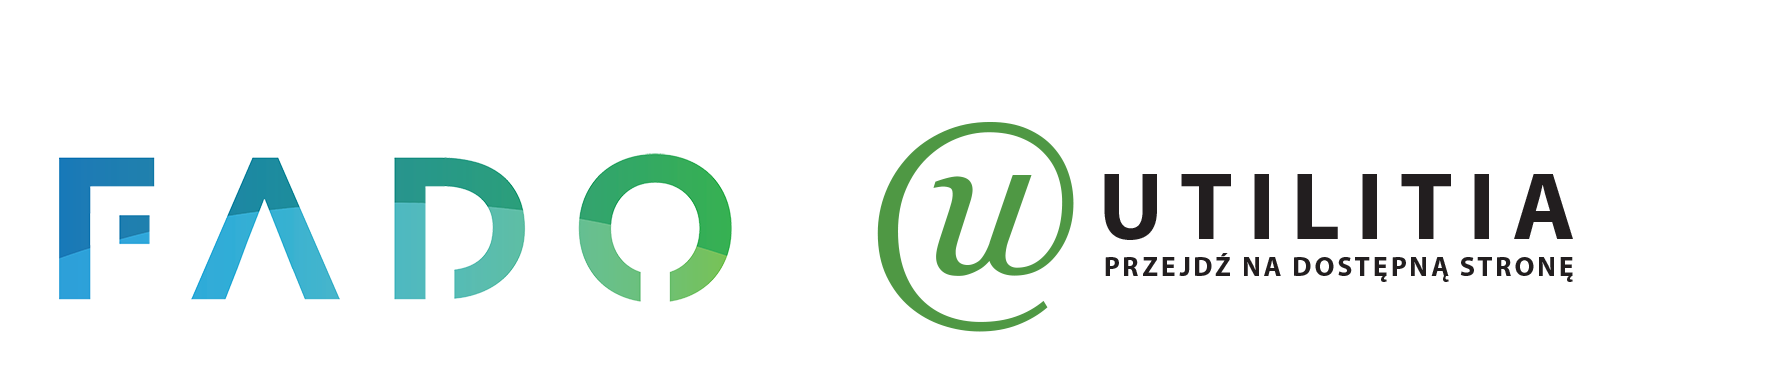 logotyp Fado i Utilitii